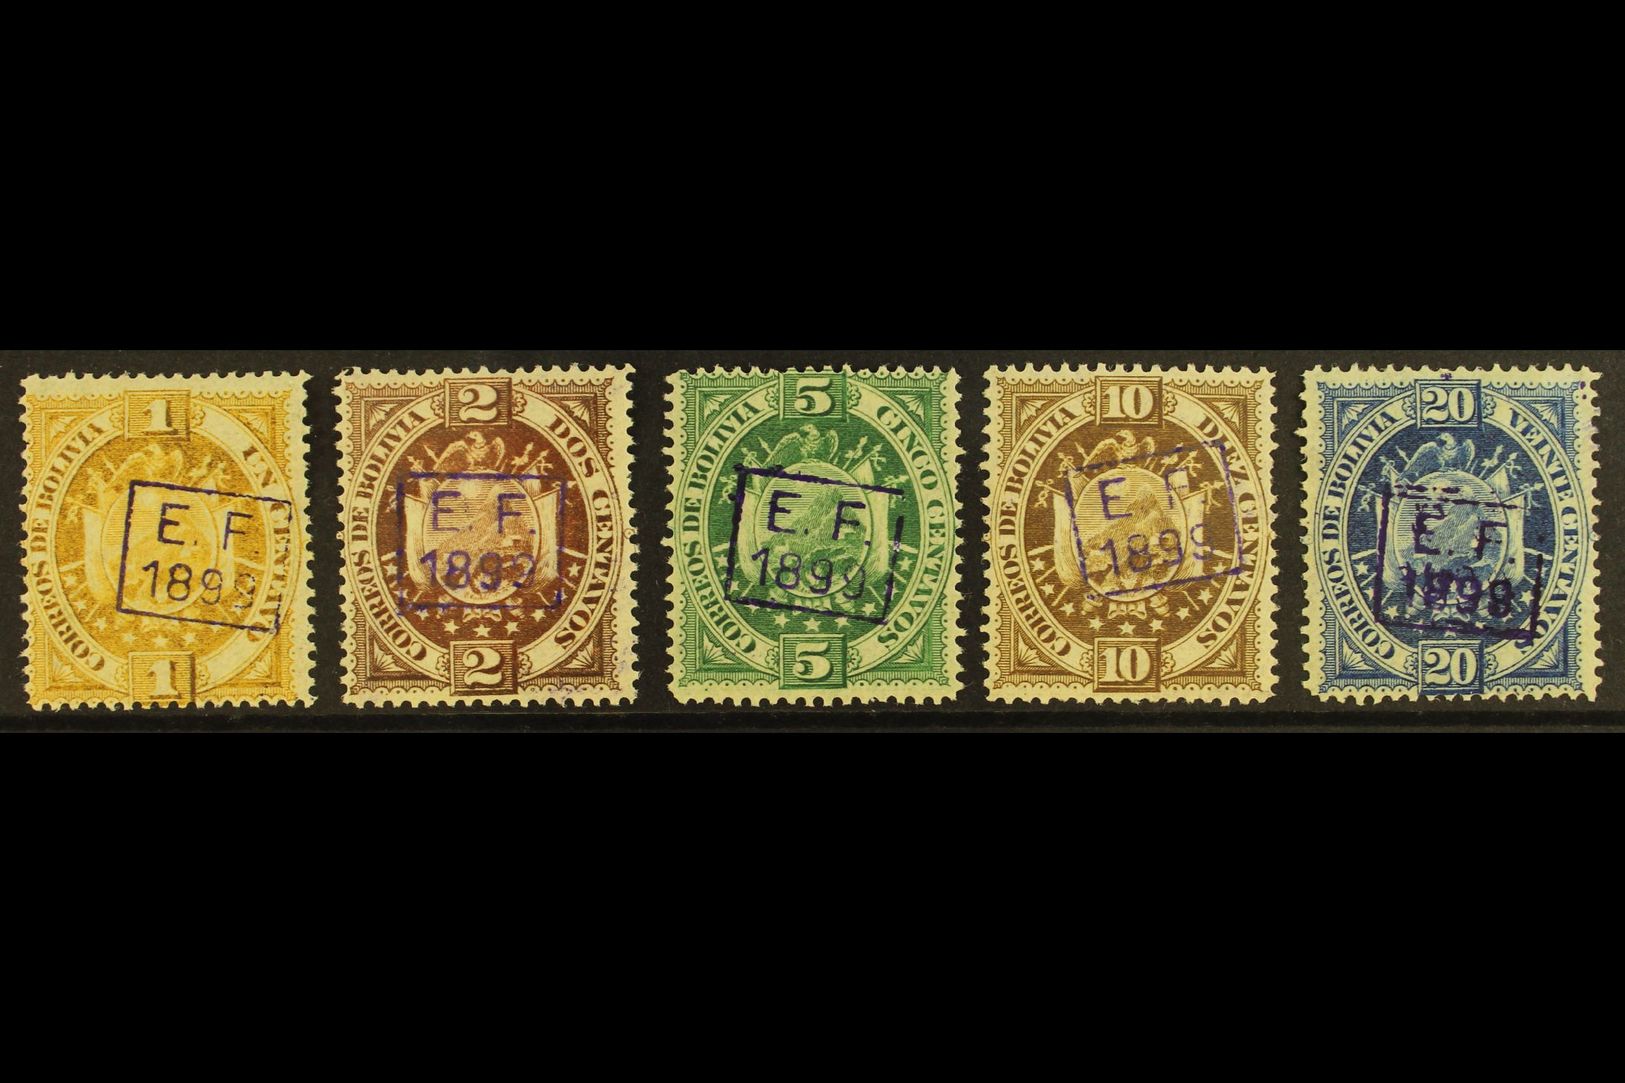 1899  Boxed "E.F. 1899" Overprints, Complete Set, Scott 55/9, Fine Mint (5). For More Images, Please Visit Http://www.sa - Bolivie